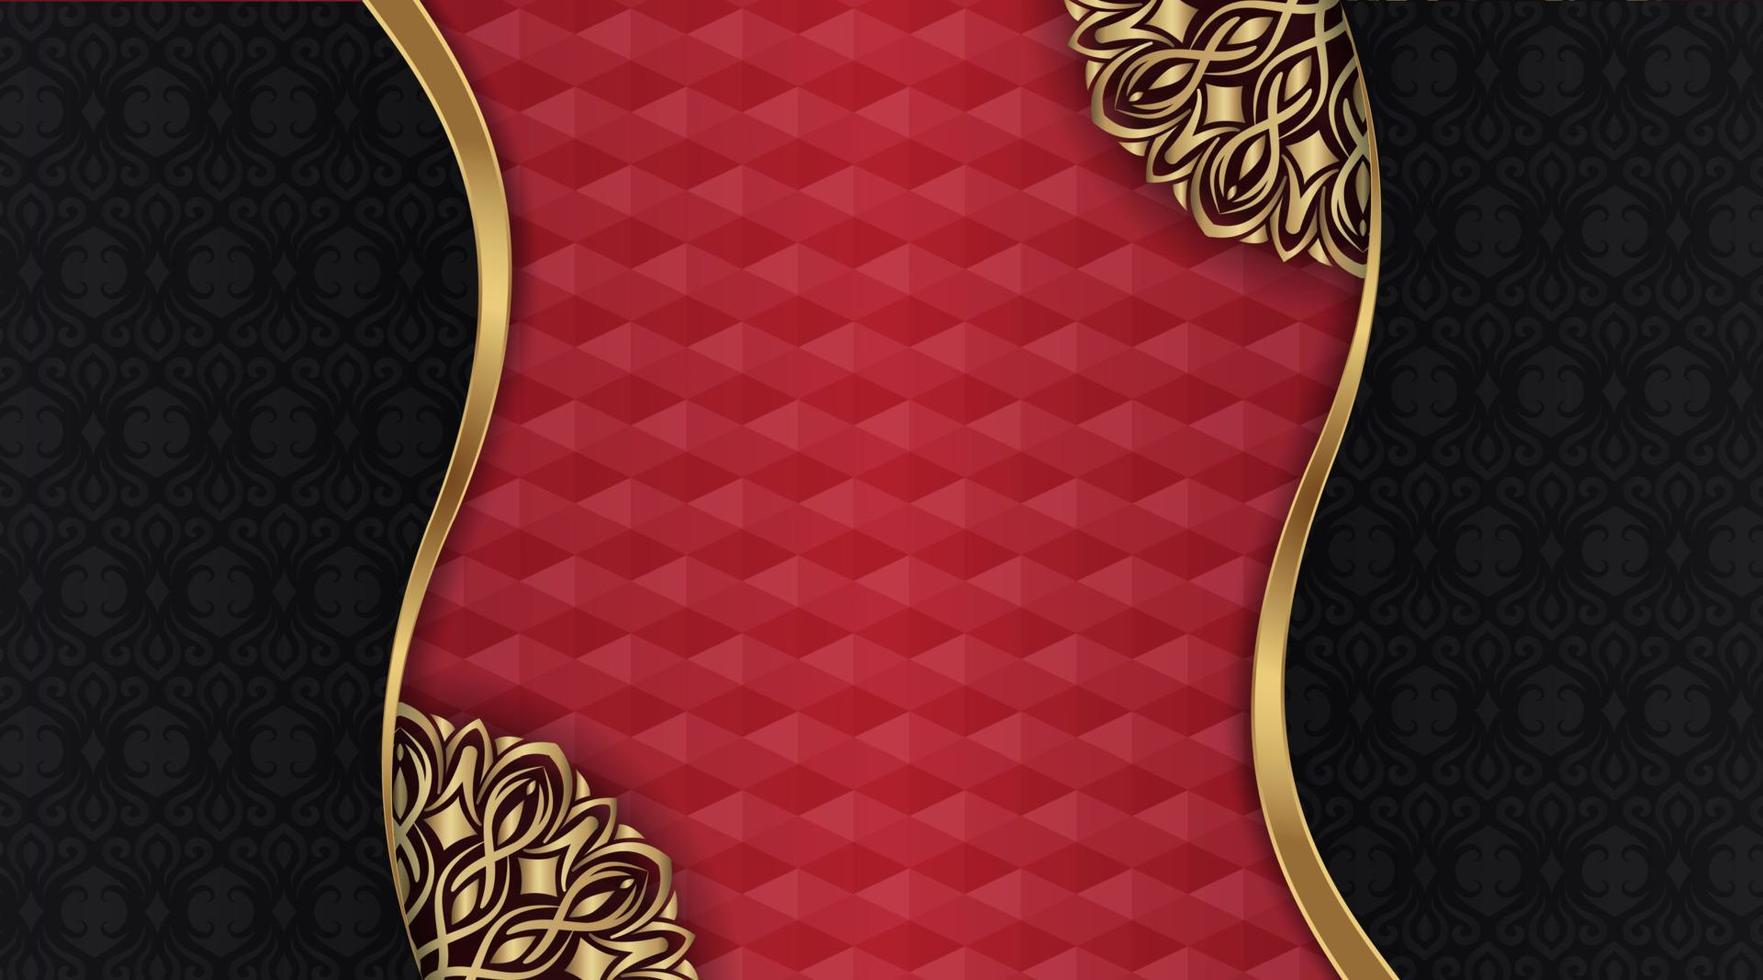 mandala achtergrond zwart en rood met goud grens vector